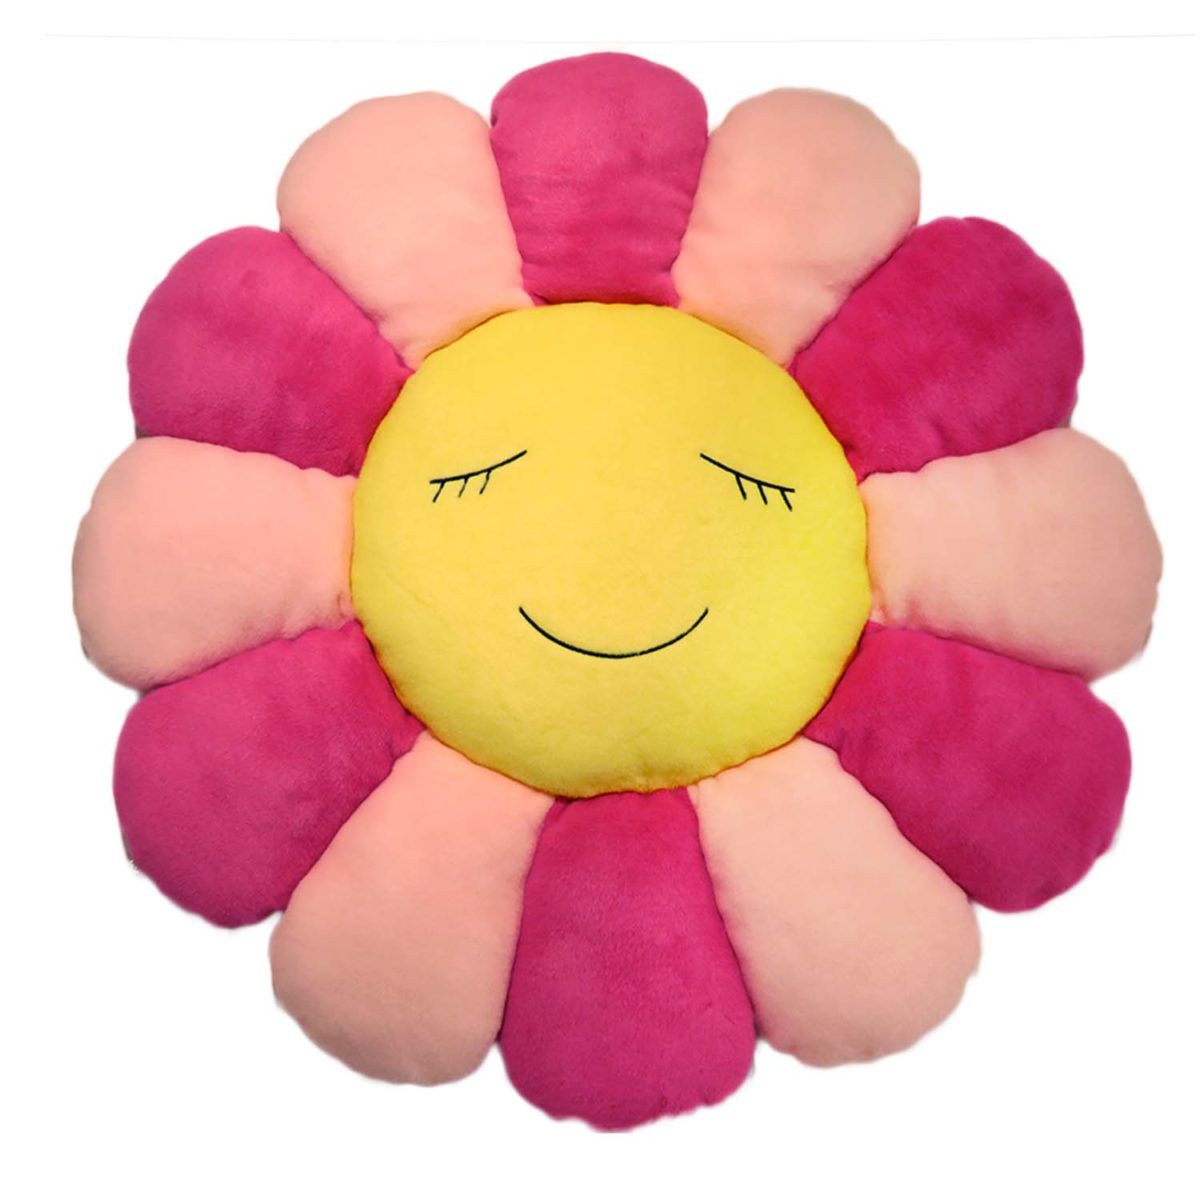 [新品/即発送可] Flower Cushion Pink